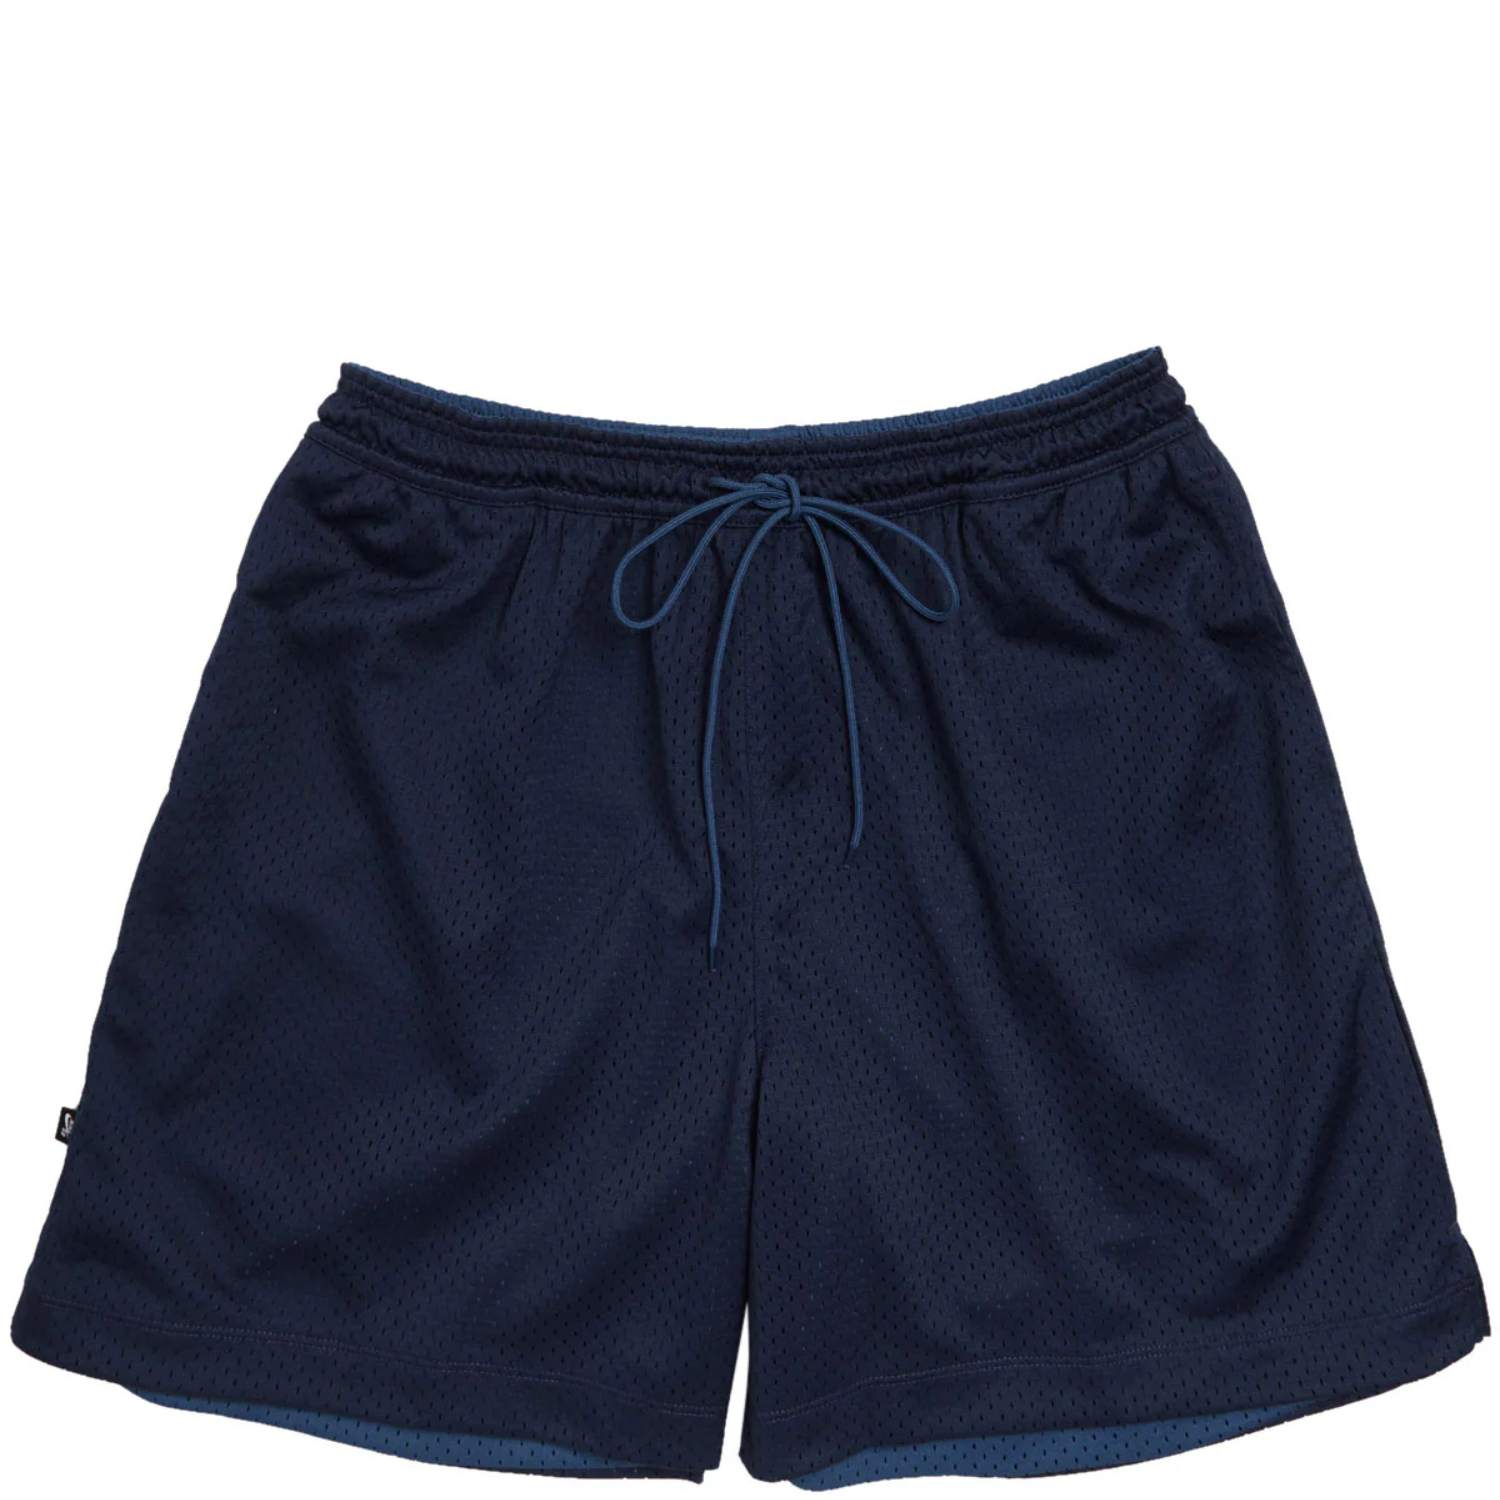 NIke SB - Basketball Shorts - FN2593-410 Midnight blue court blue reversible